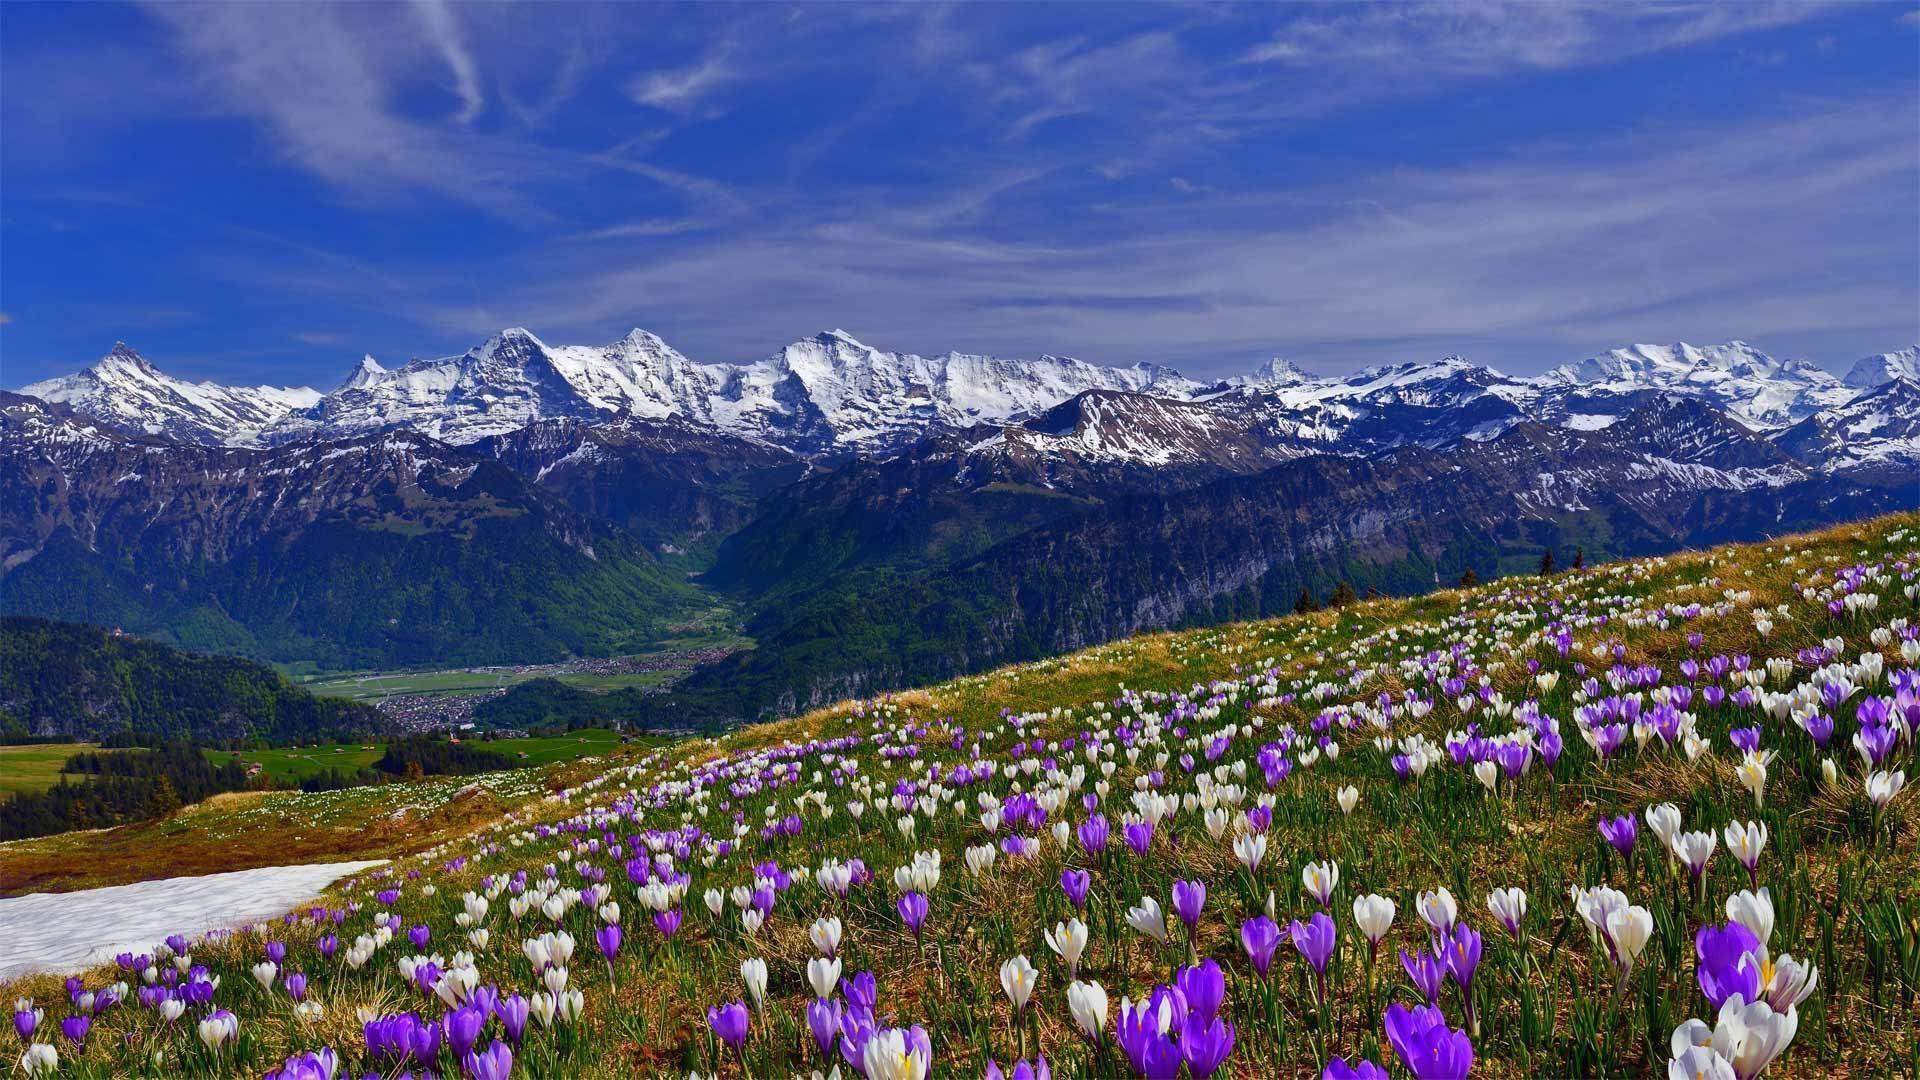 Spring Mountain Landscape Wallpaper for desktop & mobile in high